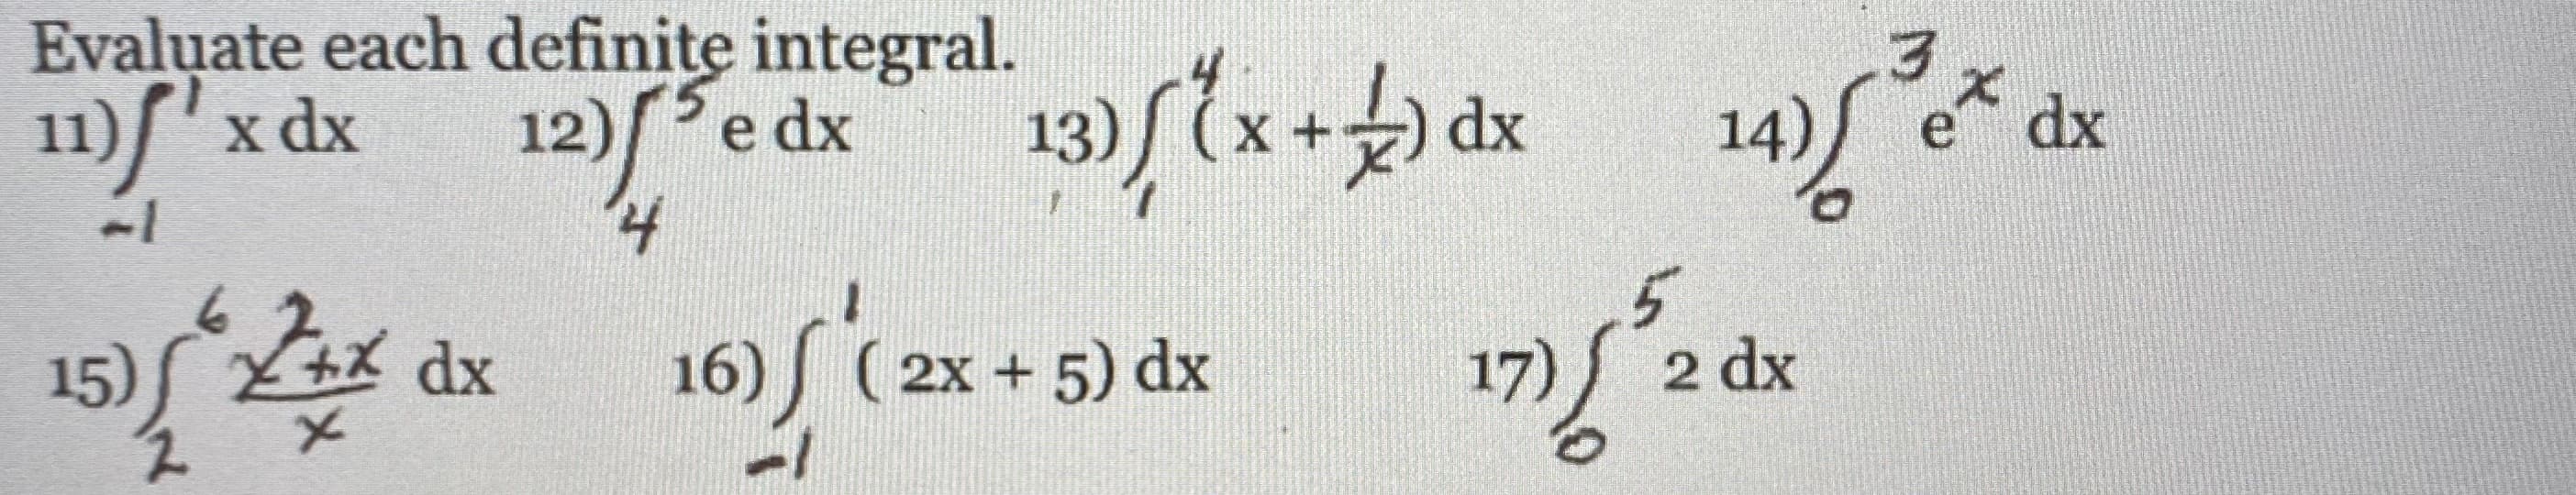 Evaluate each definite integral.
14)/
3.
e dx
11)
хаx
e dx
13)
15)
と4X dx
16) ( 2x + 5) dx
17)
2 dx
